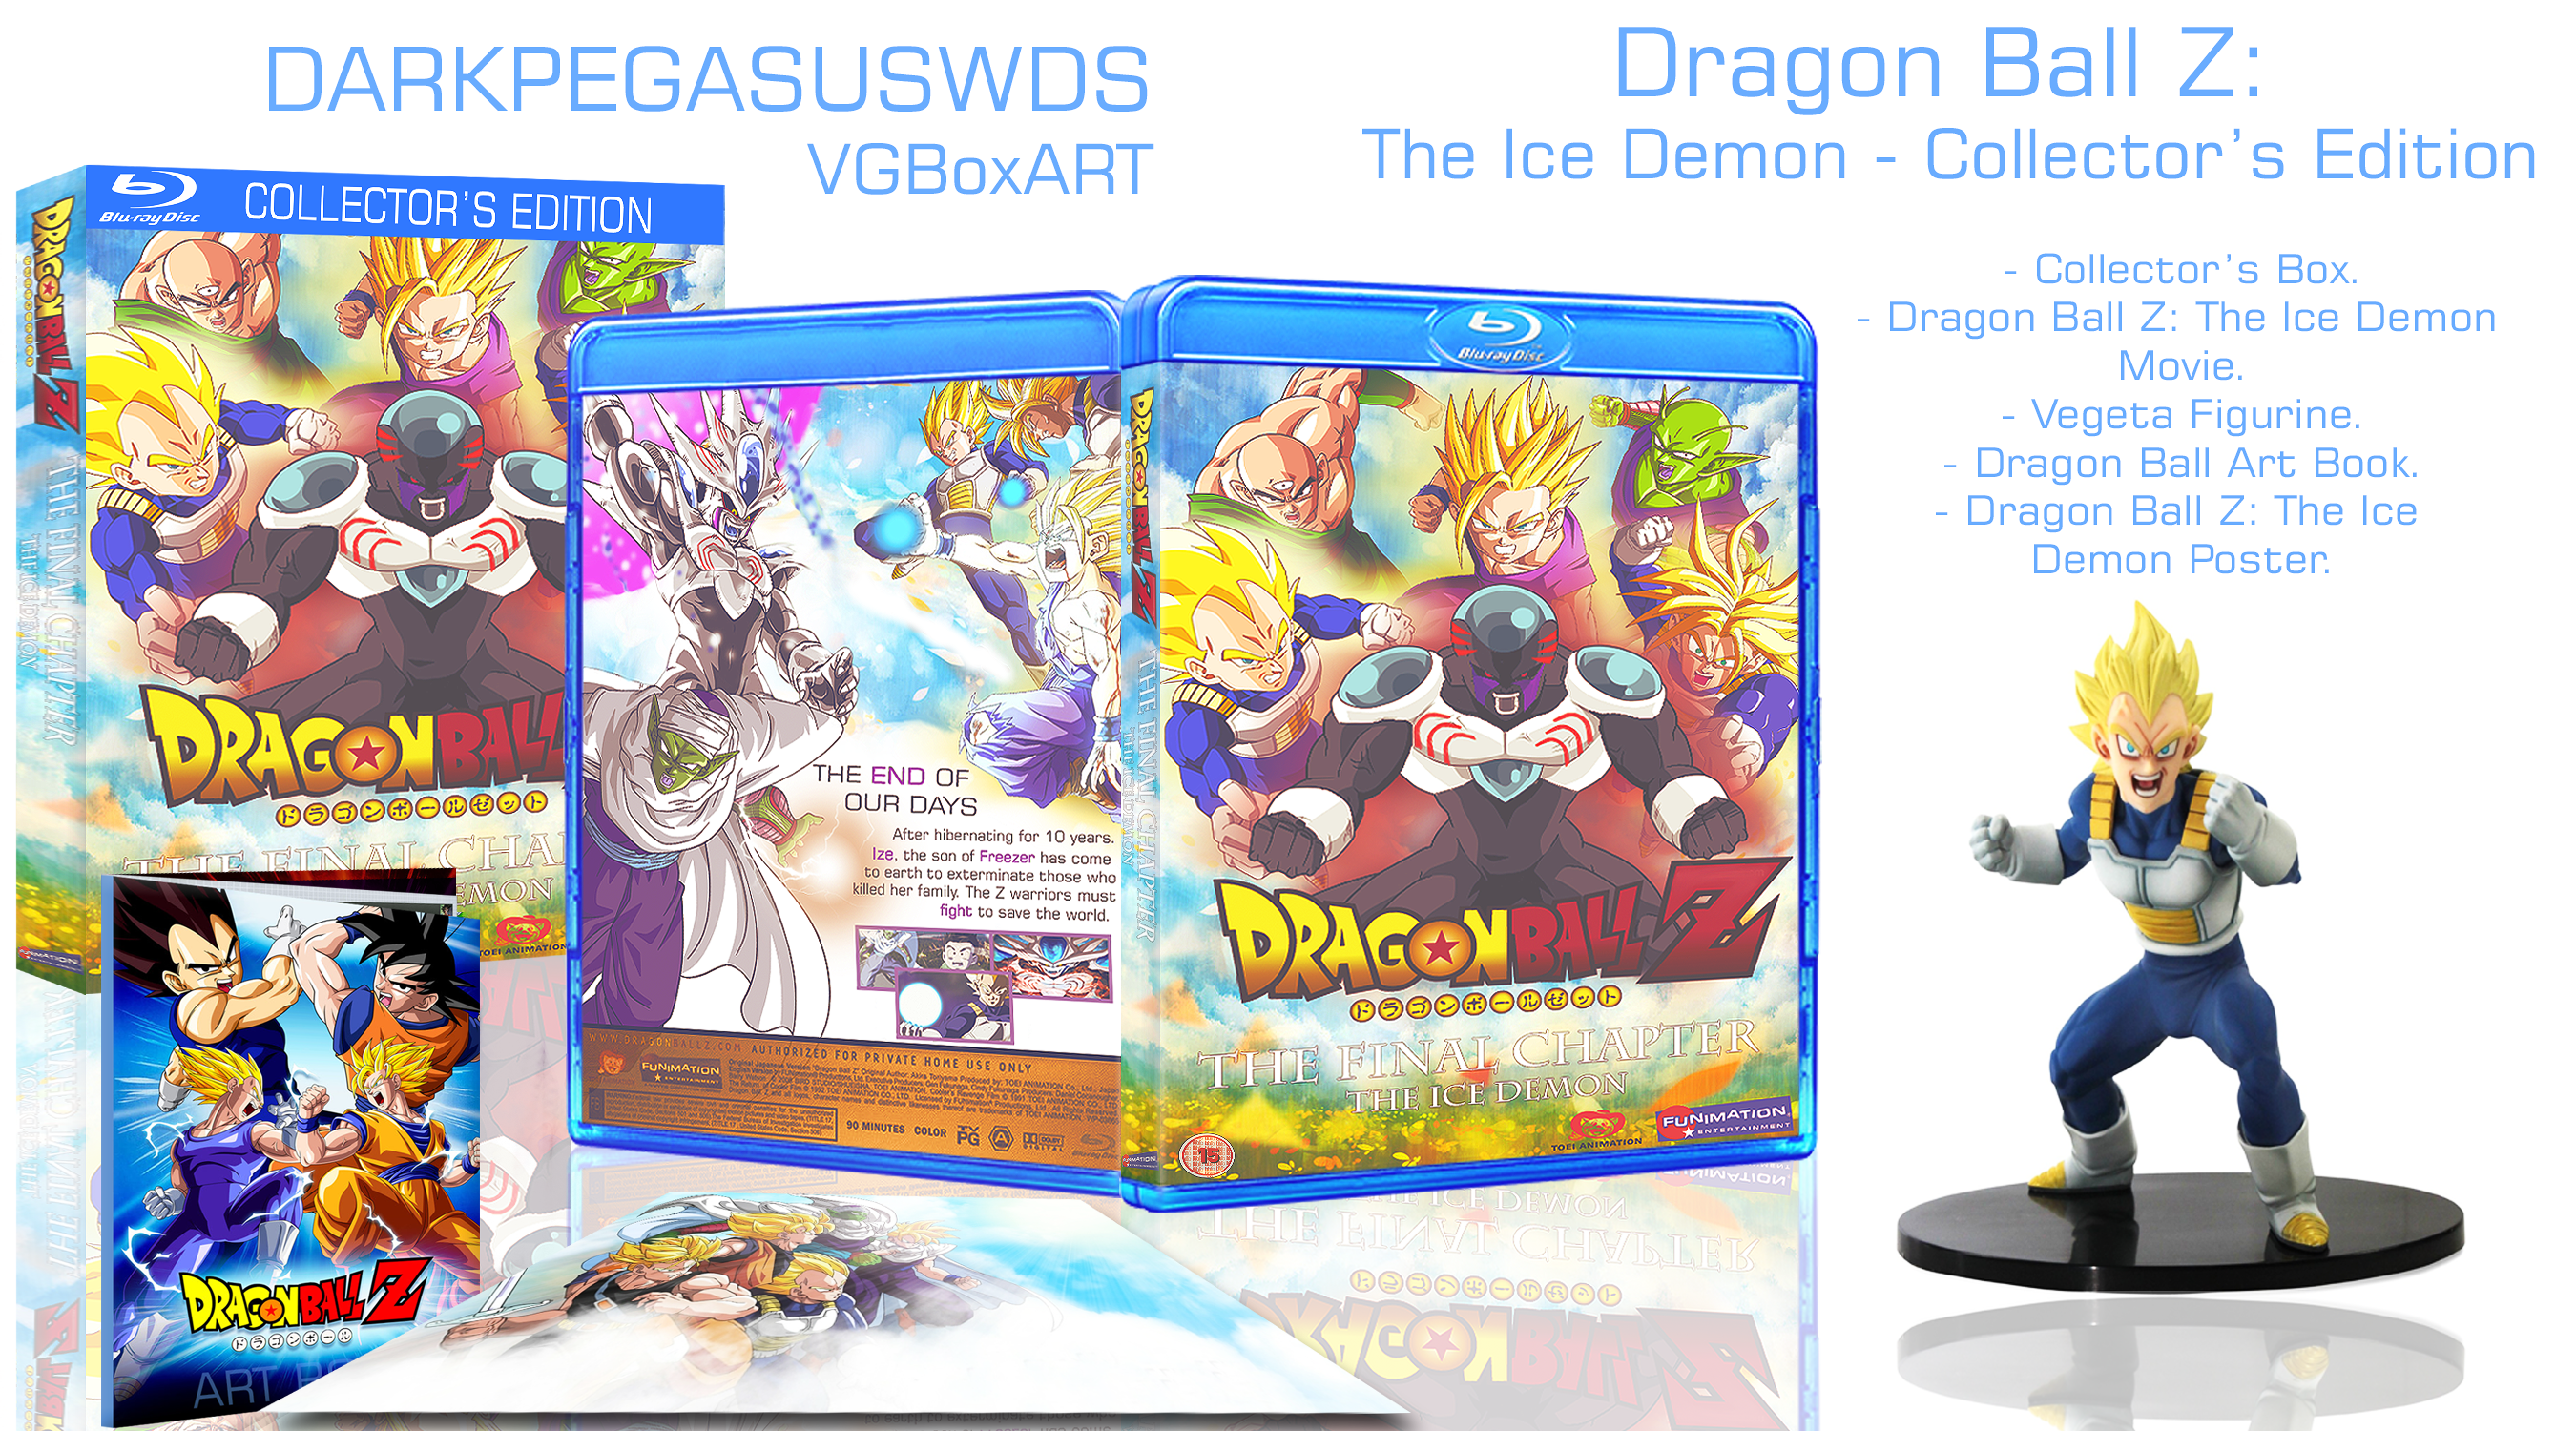 Dragon Ball Z: The Ice Demon box cover